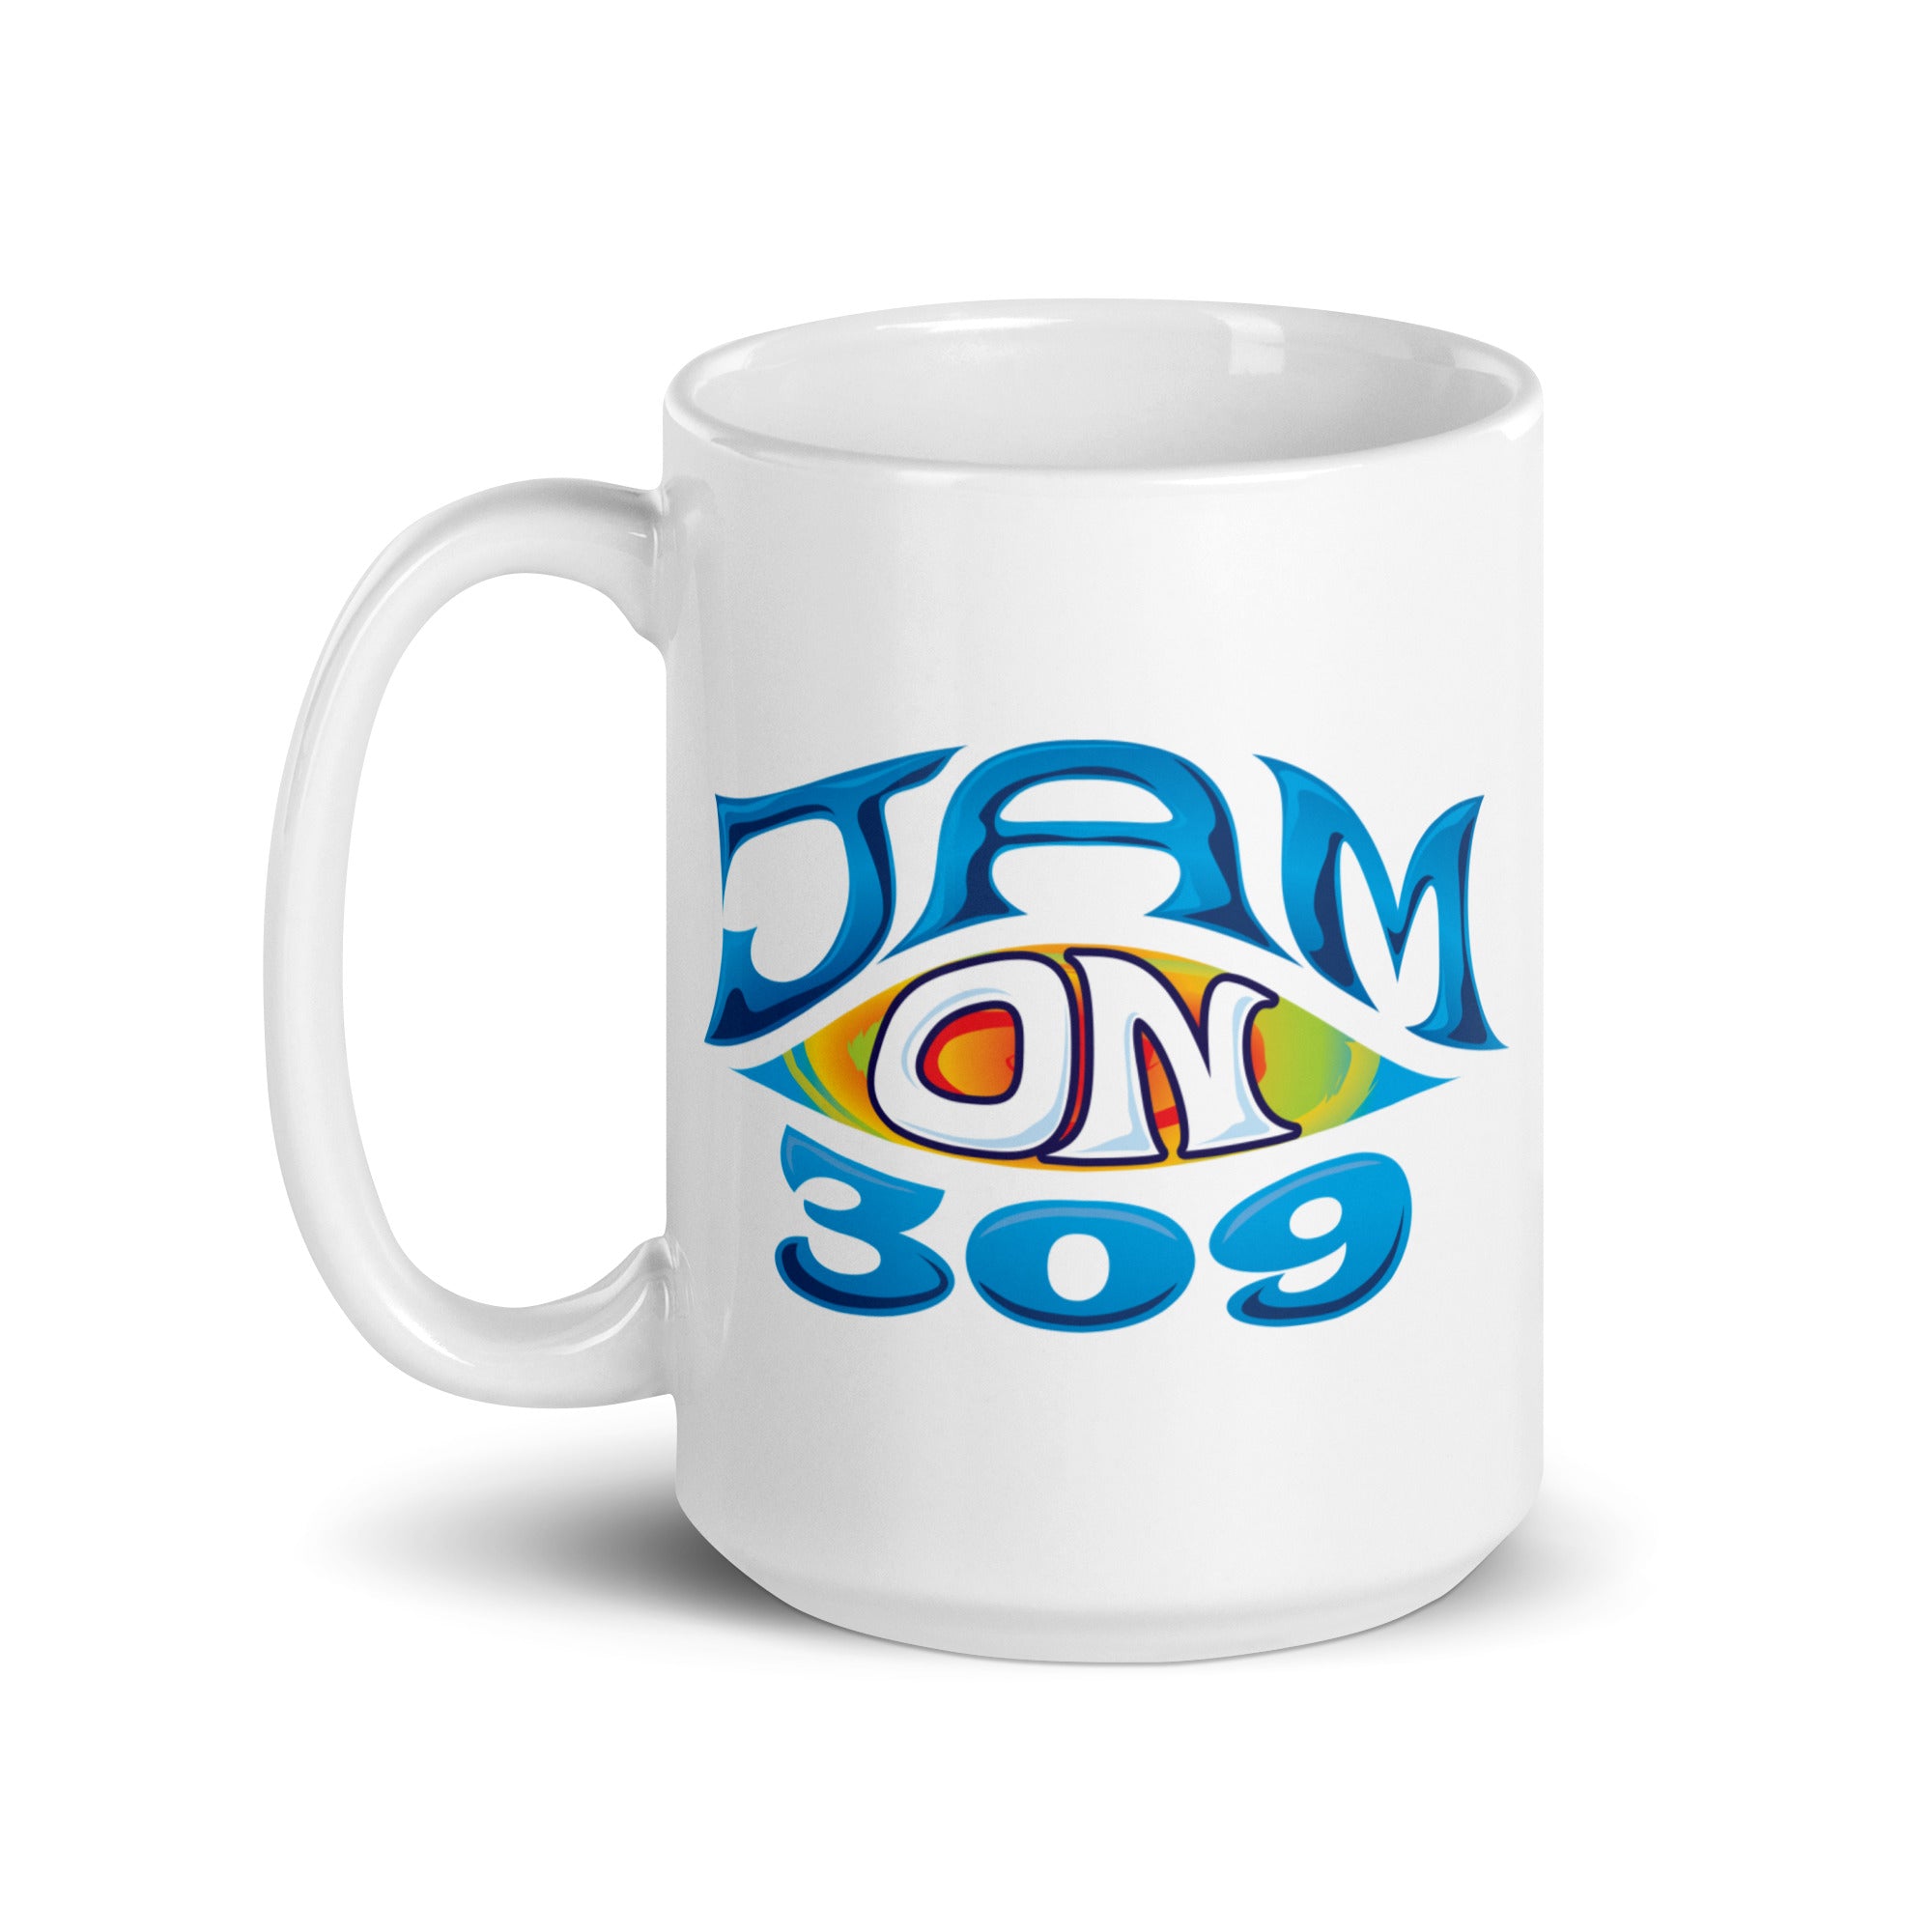 Jam on 309: Mug